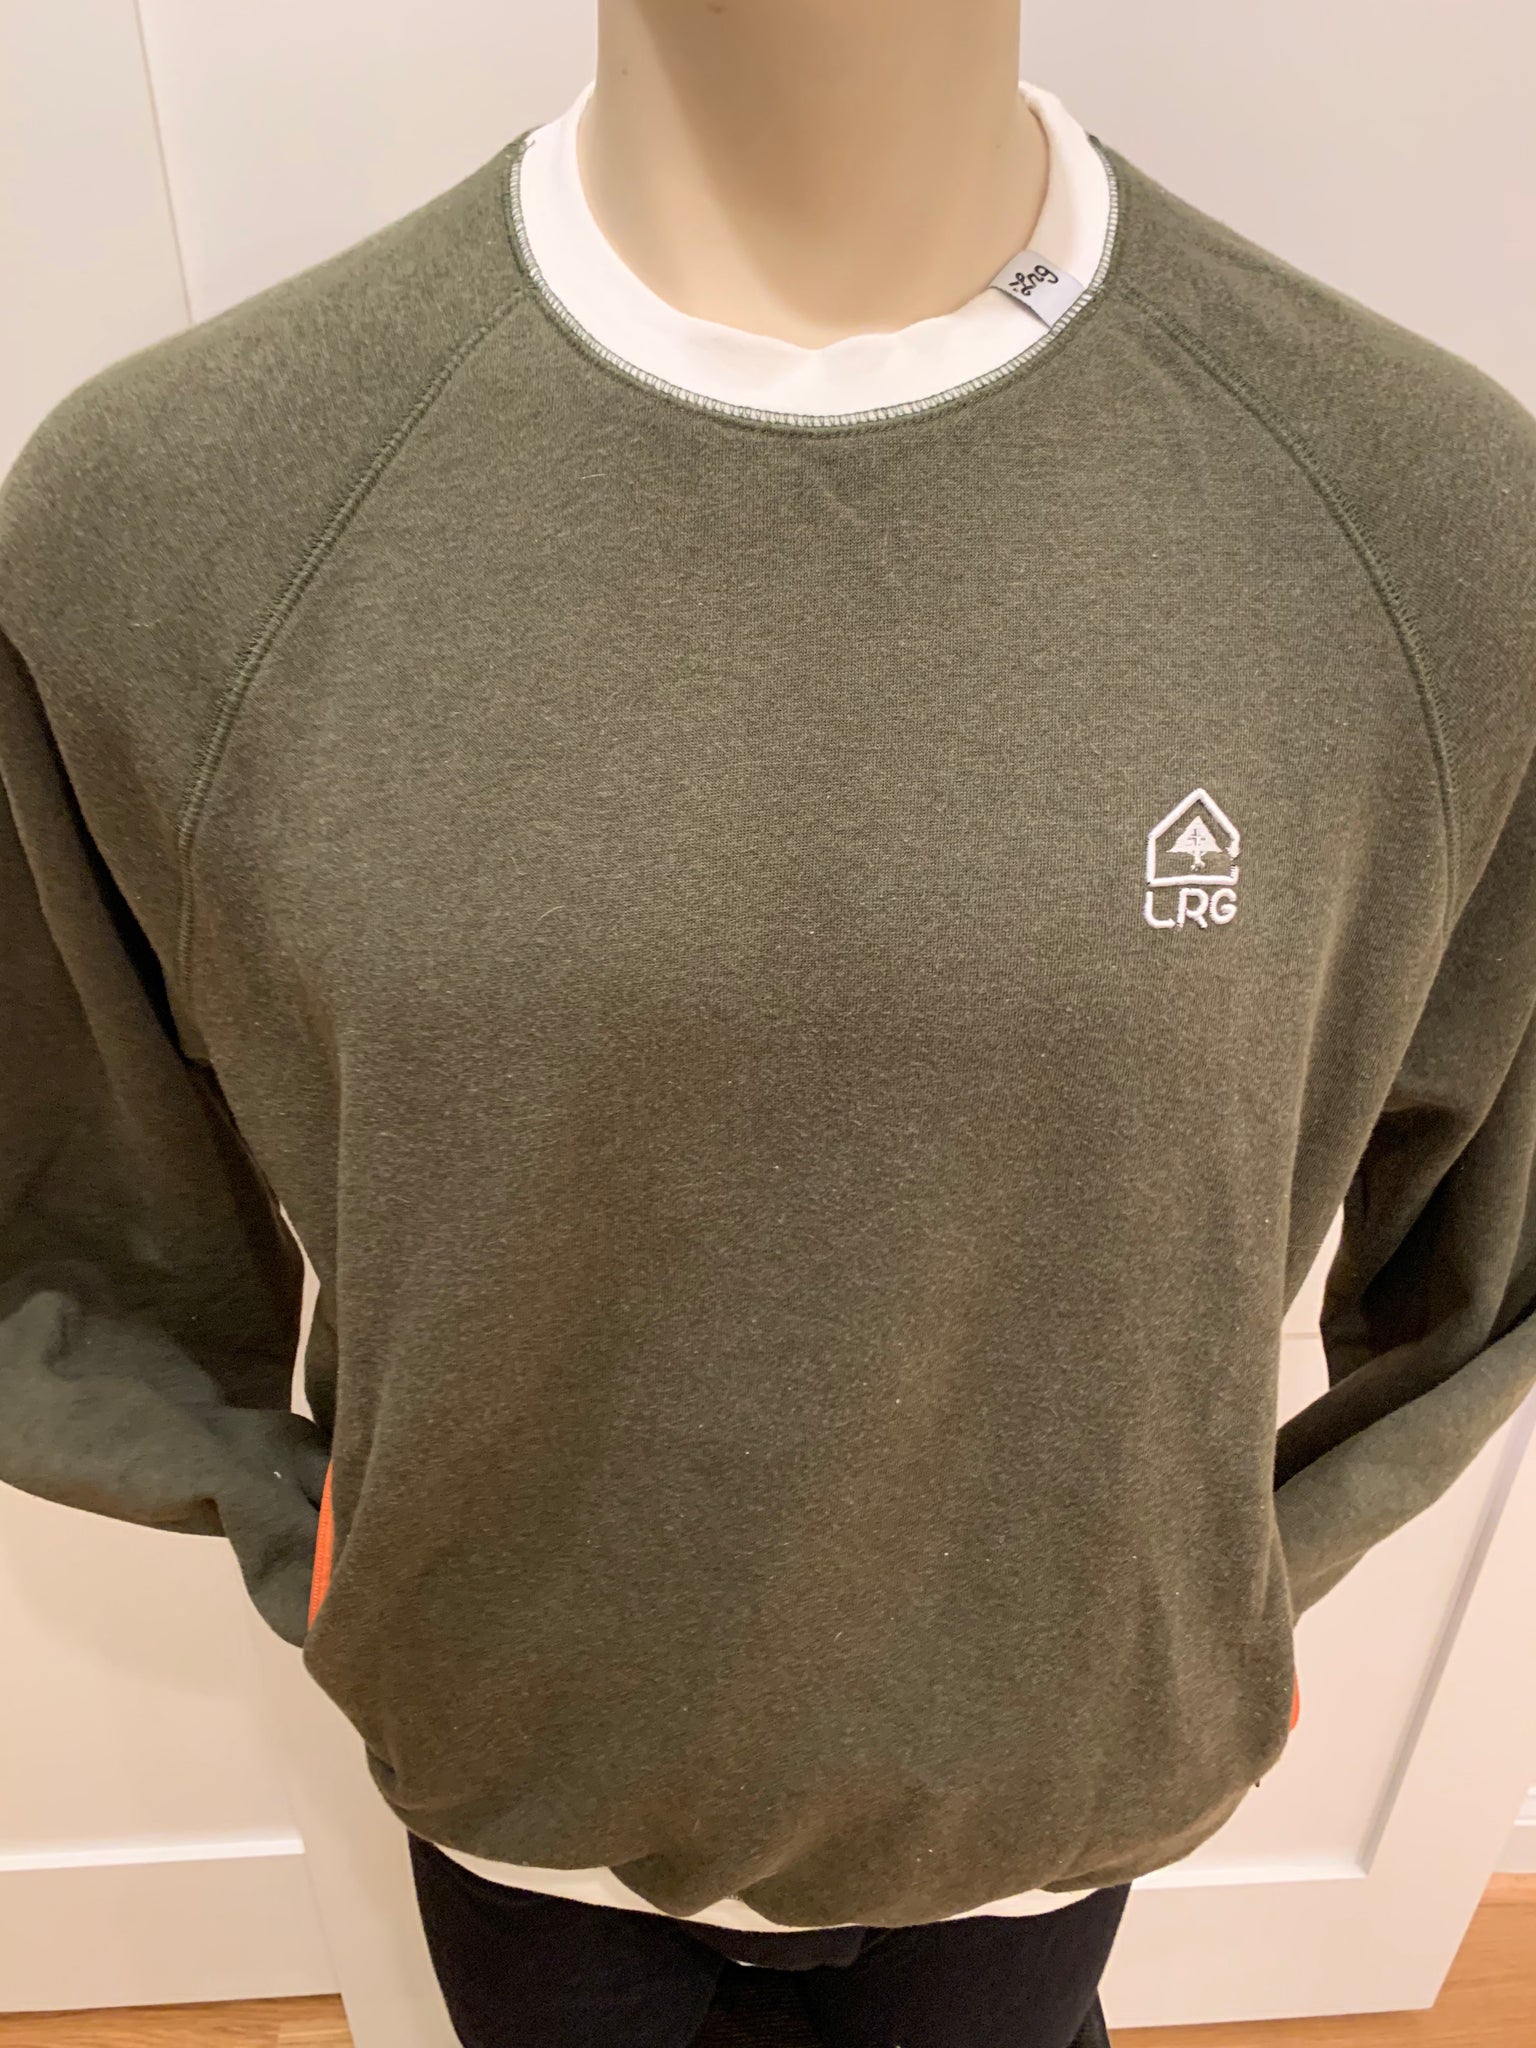 LRG Crew Neck Sweatshirt - Medium